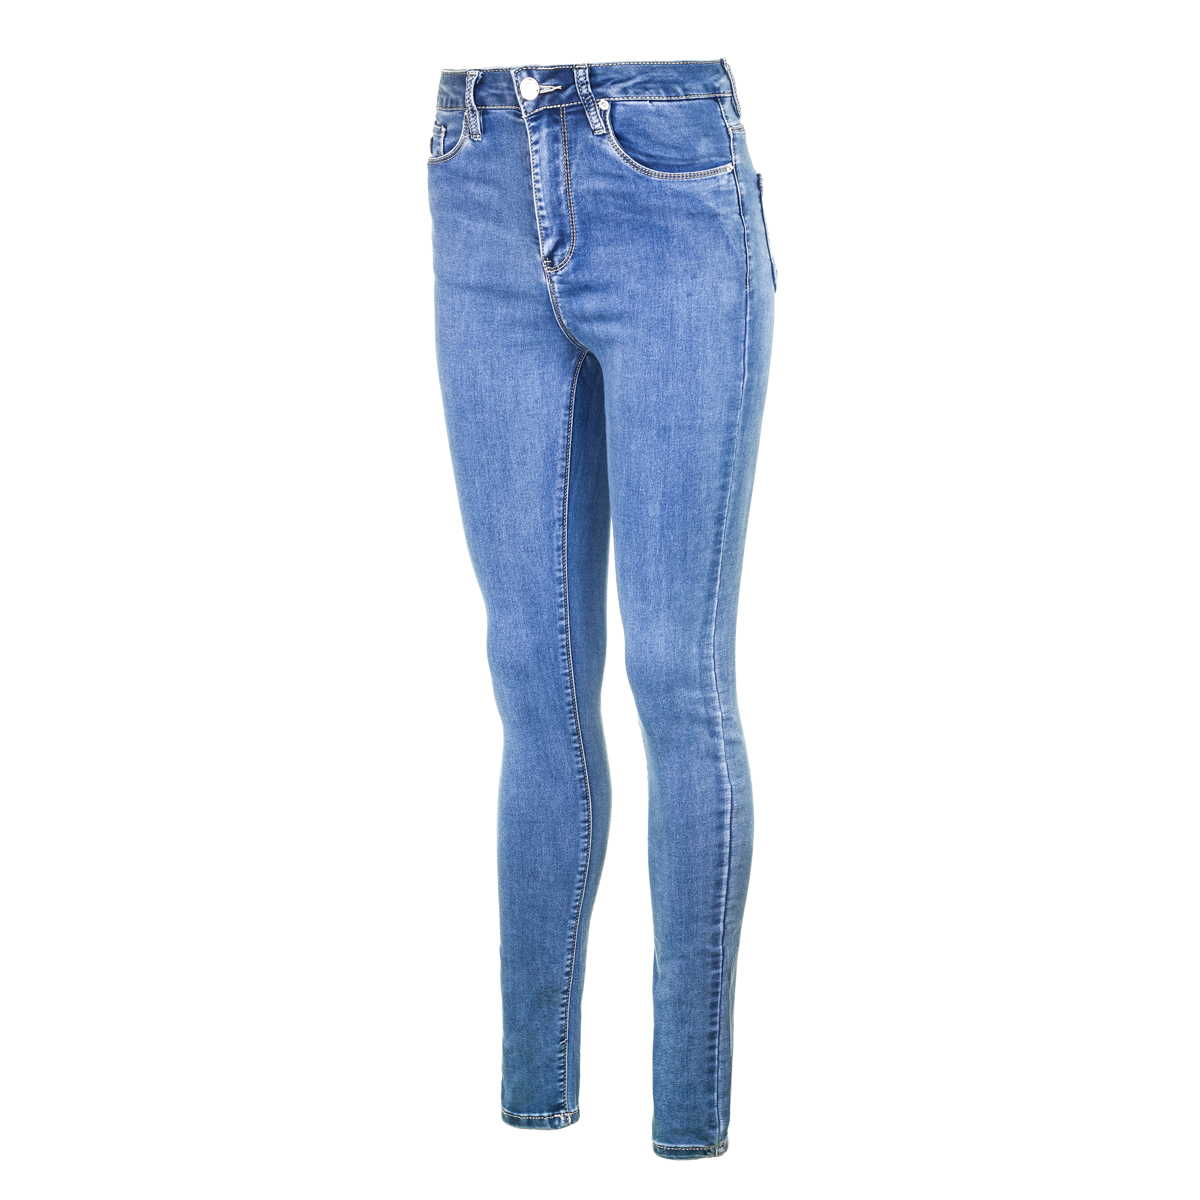 Жен. джинсы арт. 12-0086 Голубой р. 30 Китай, размер 30 - фото 2